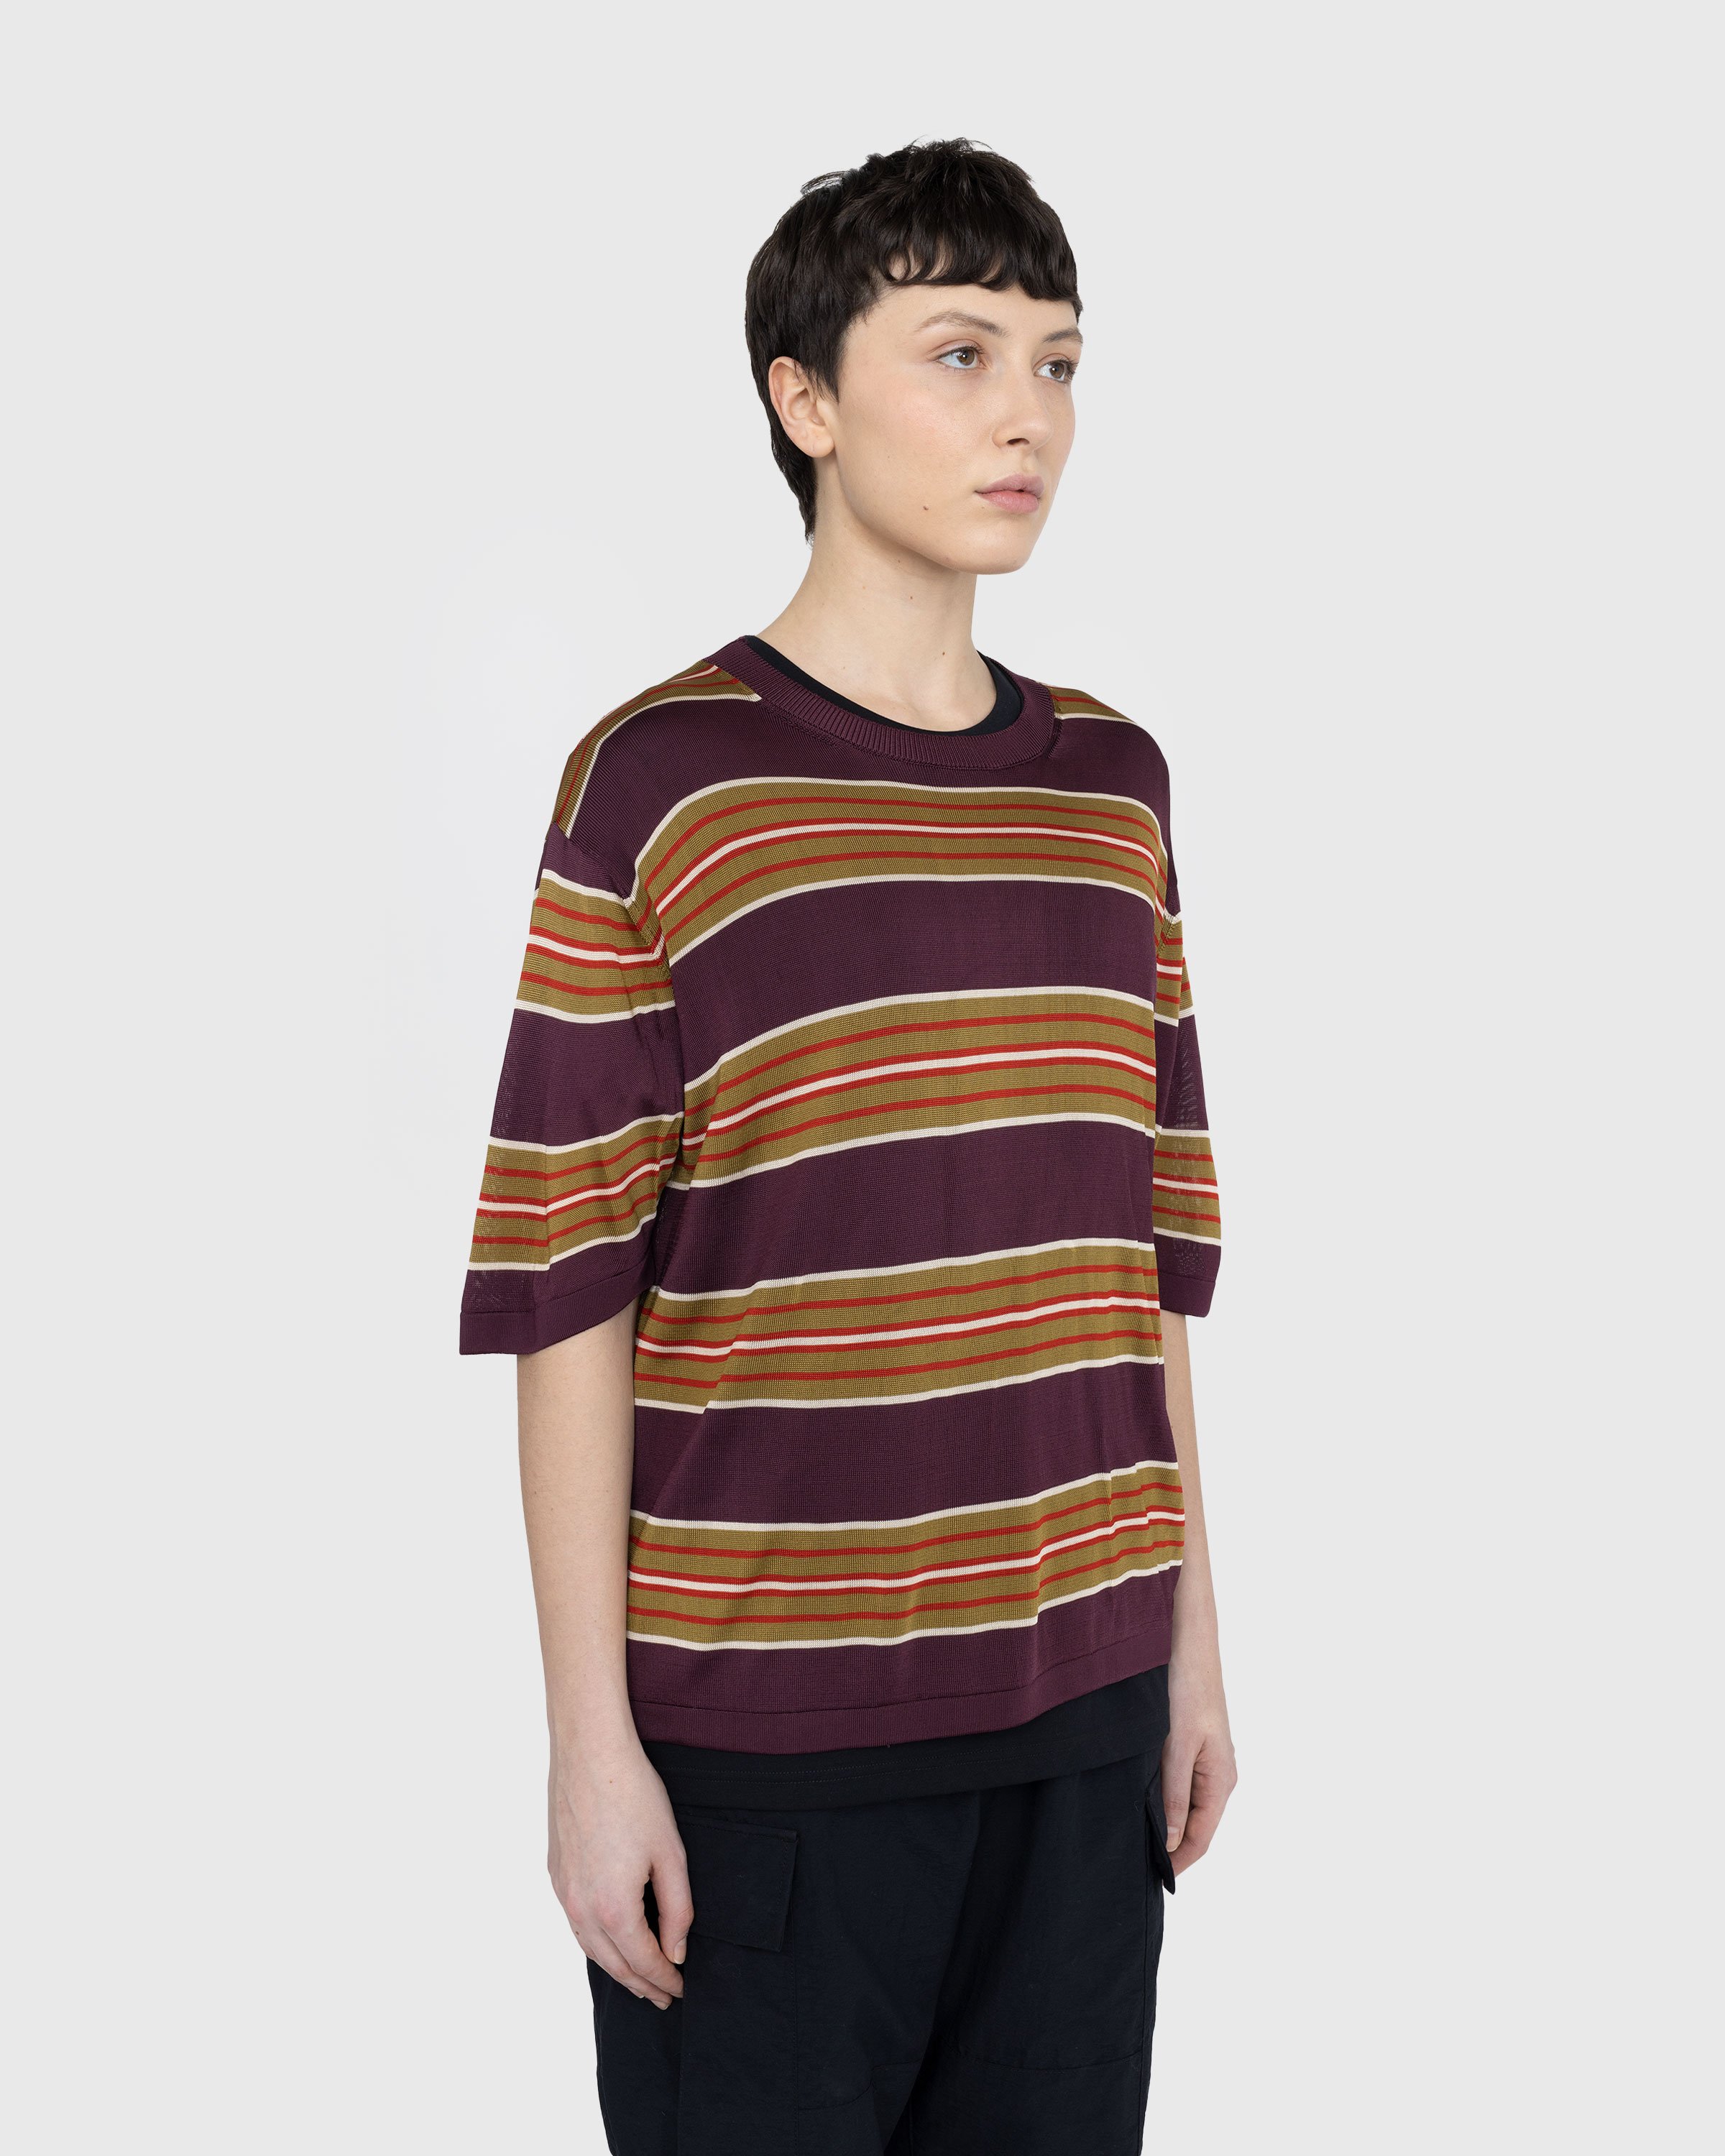 Dries van Noten - Mias Knit T-Shirt Burgundy - Clothing - Red - Image 2